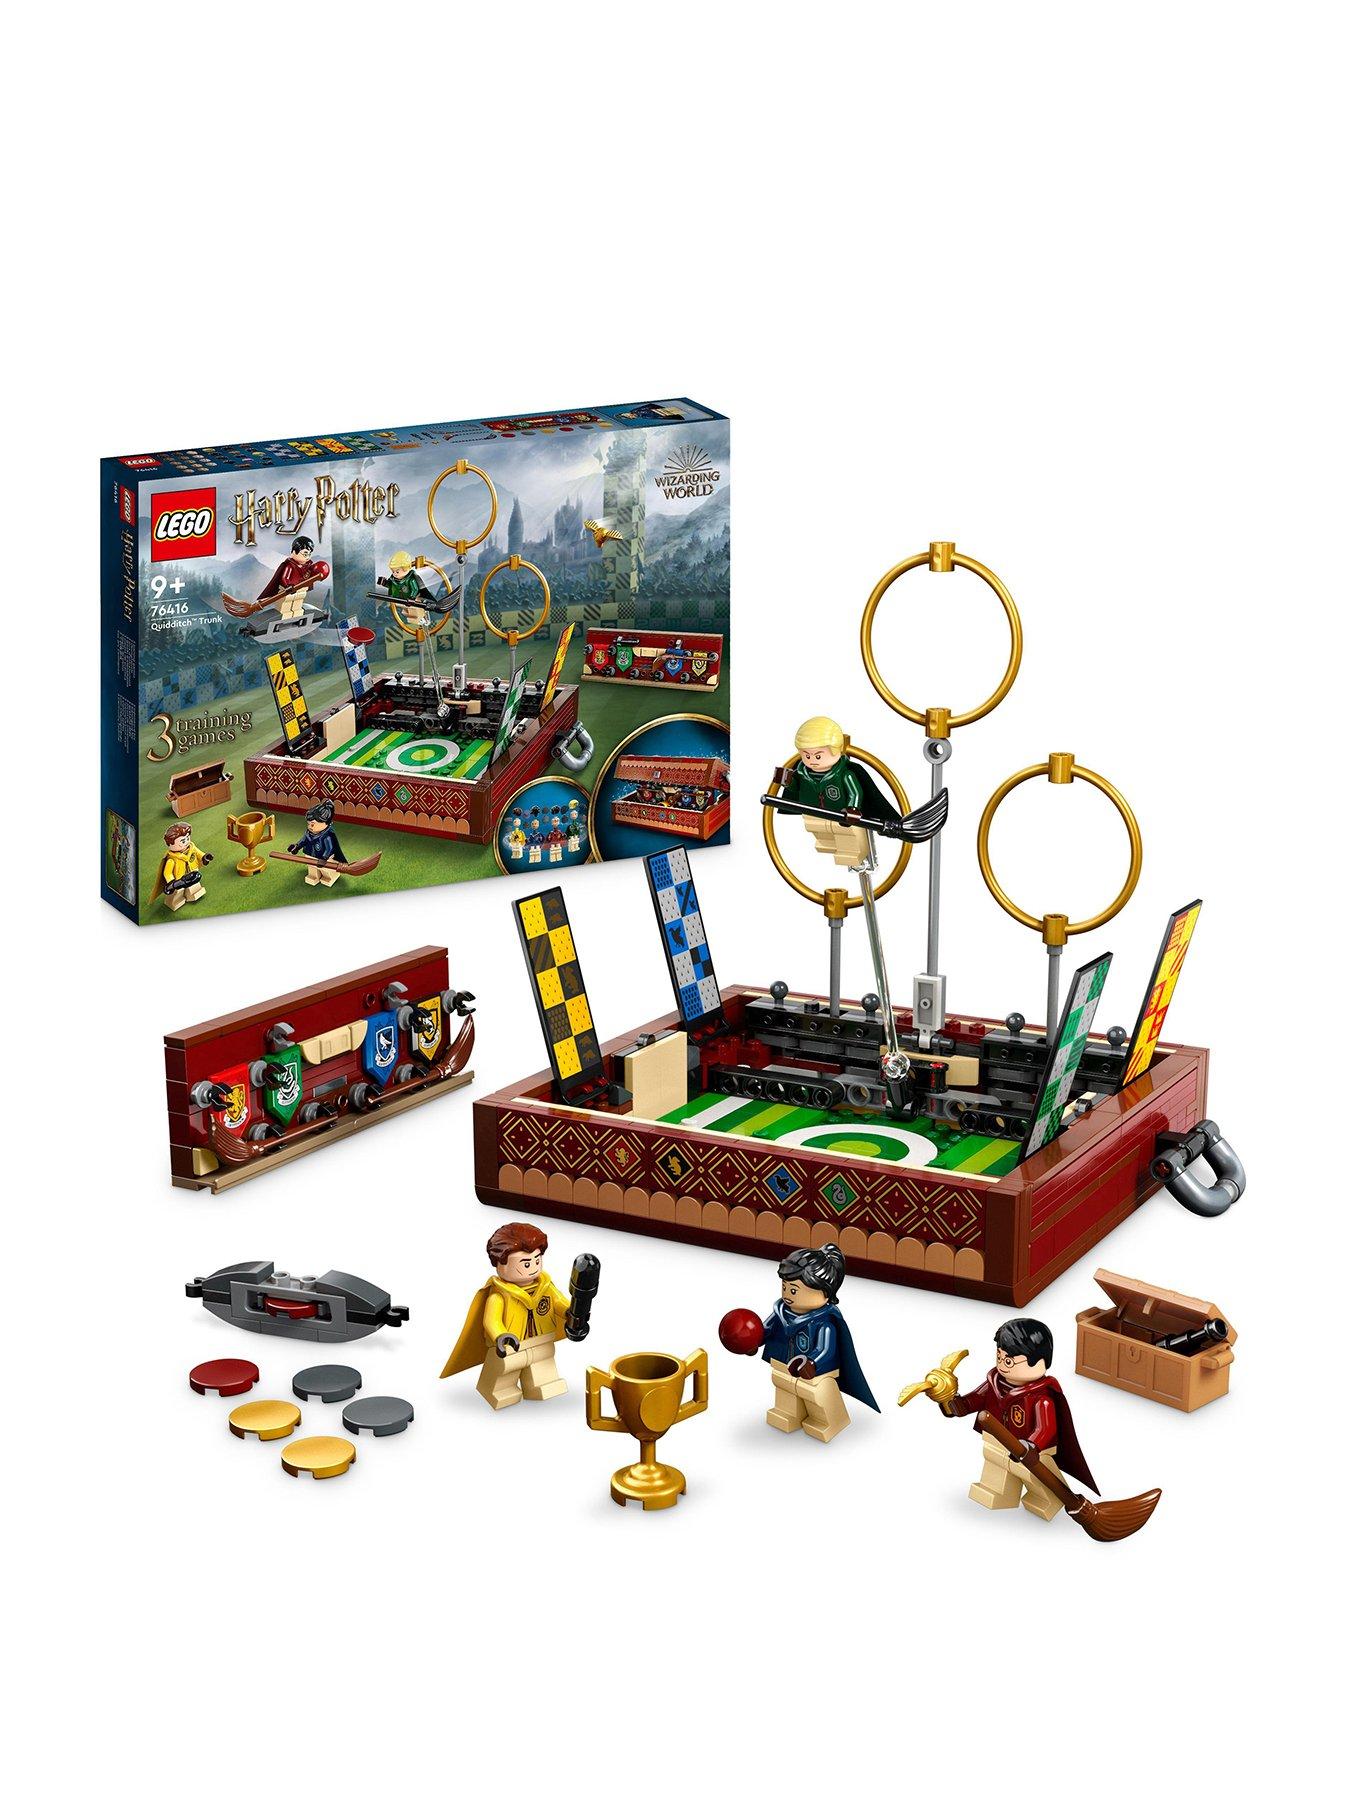 LEGO Harry Potter Collection (XBOX ONE) preço mais barato: 6,97€